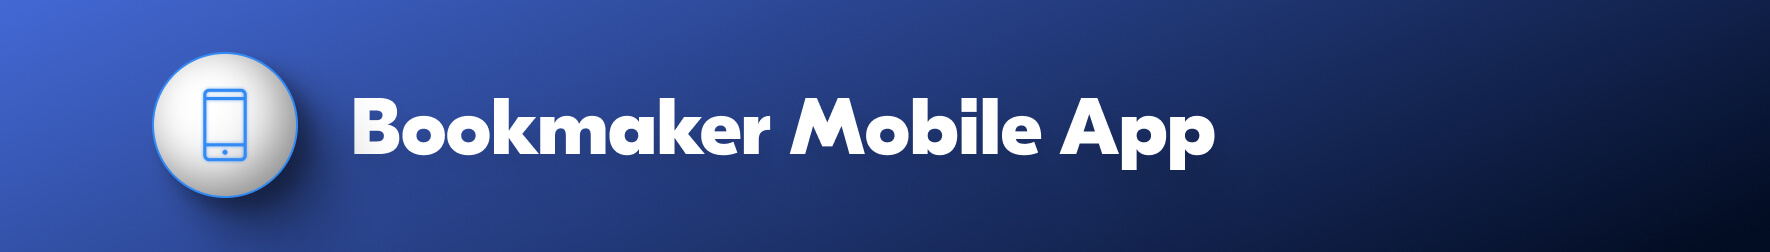 Bookmaker Mobile App